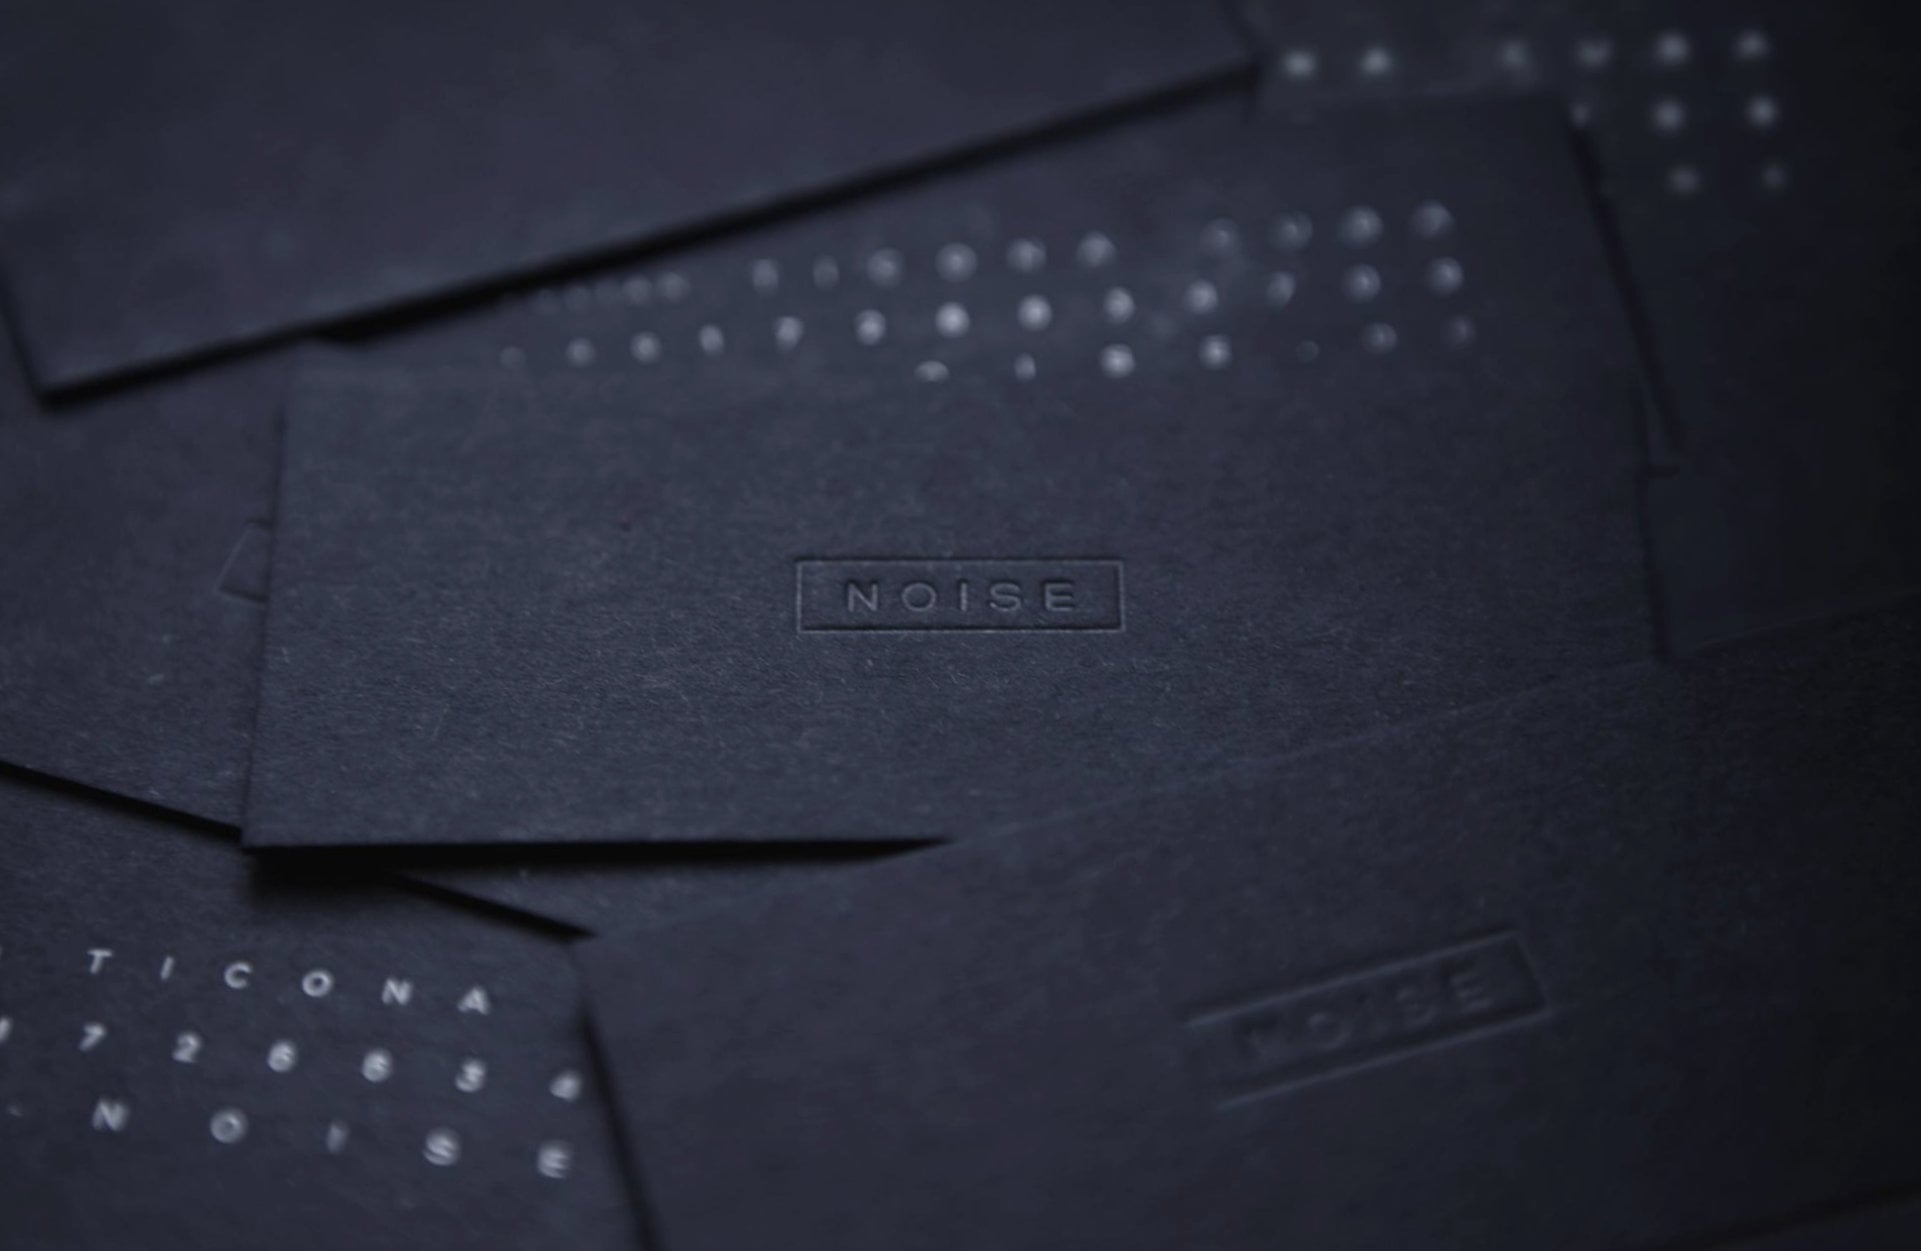 NOISE - black business cards